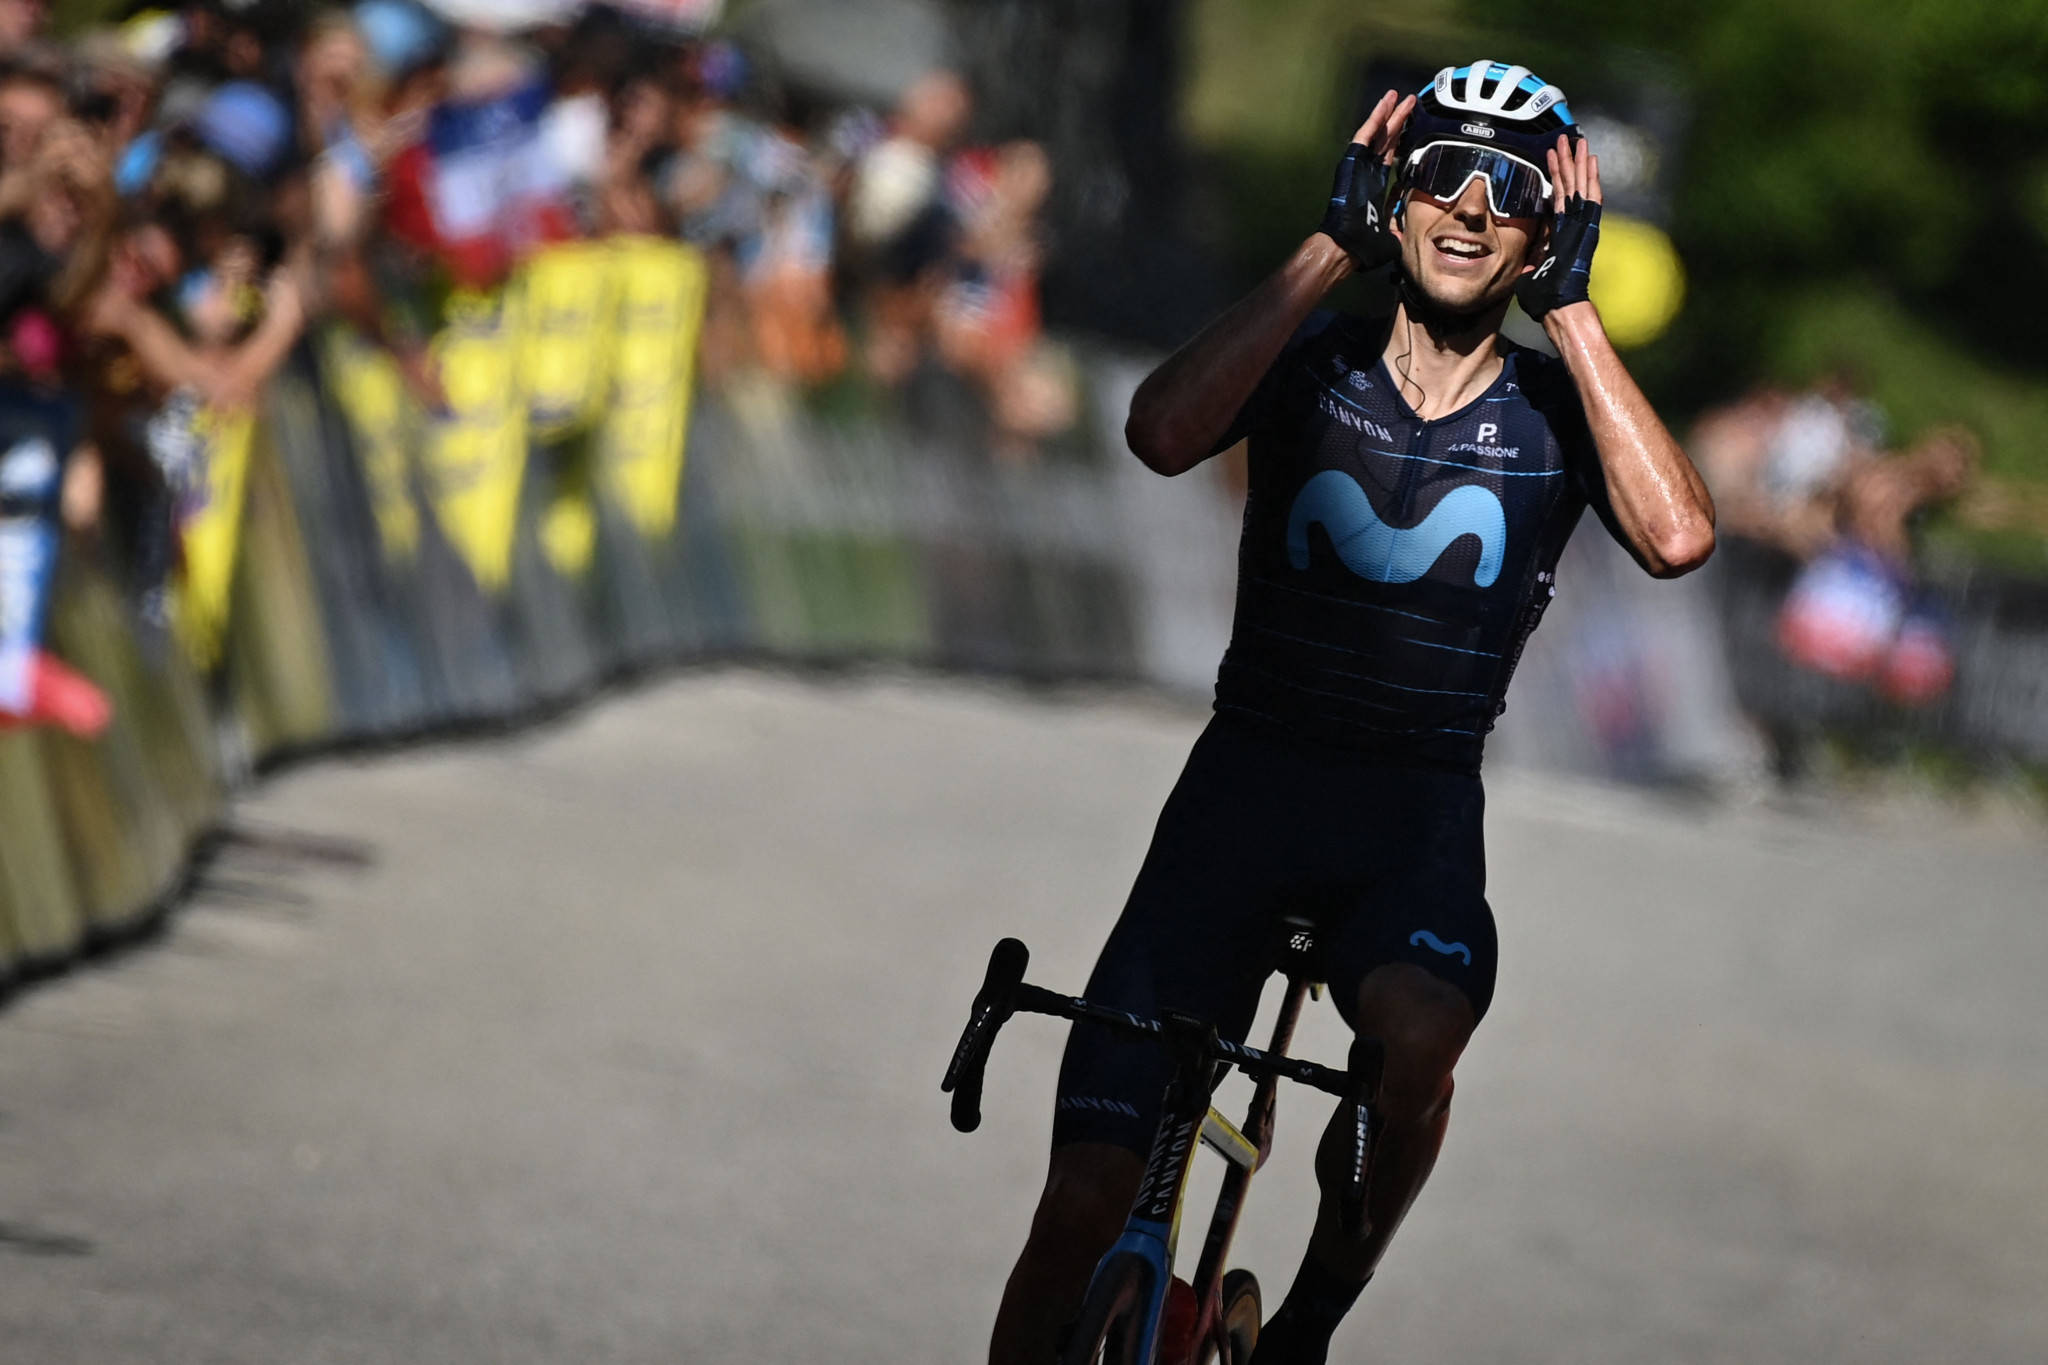 Verona wins penultimate Critérium du Dauphiné stage as Roglič takes overall lead